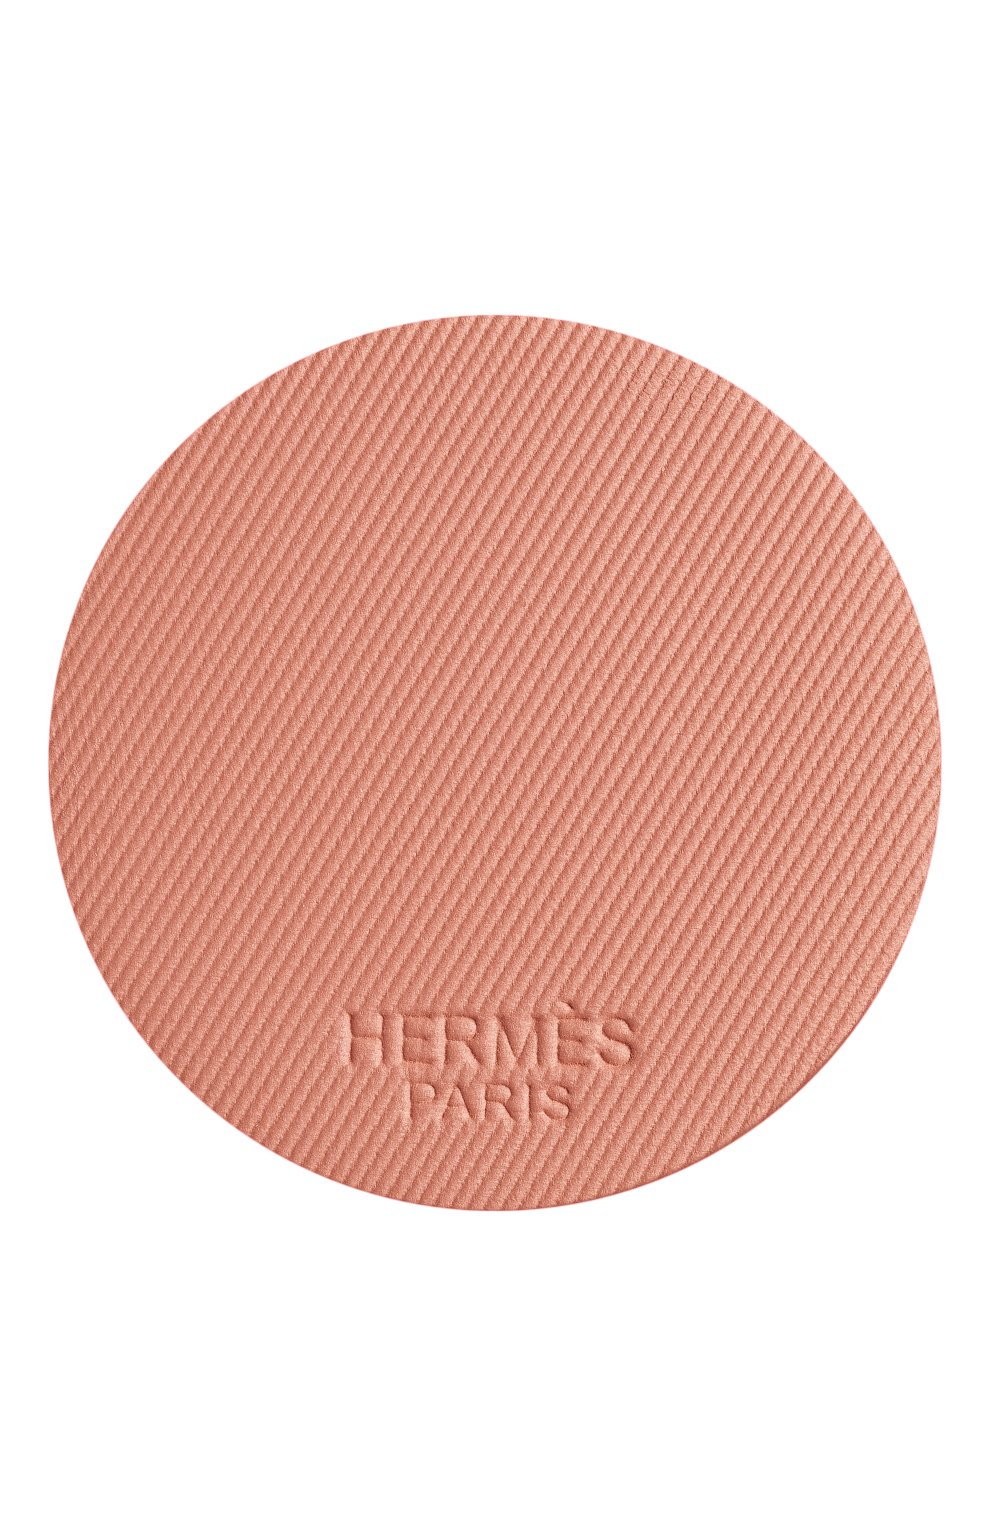 Румяна rose hermès silky blush, rose tan (6g) HERMÈS  цвета, арт. 60165PV049H | Фото 8